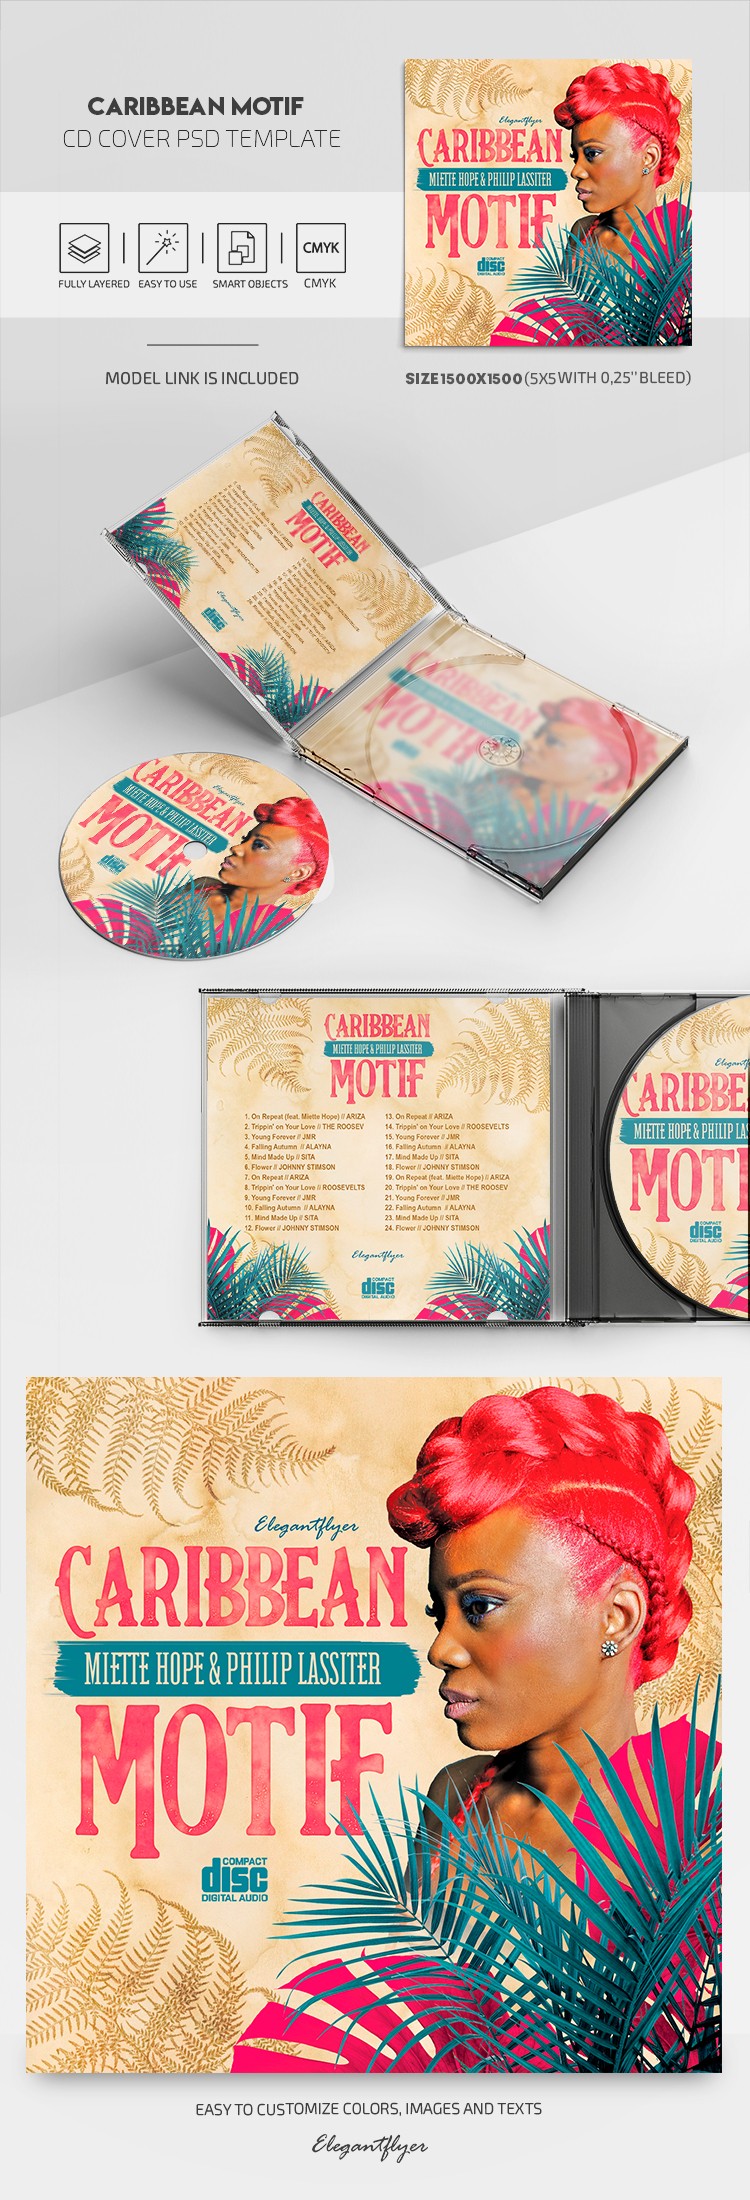 Capa do CD Motif Caribenho by ElegantFlyer